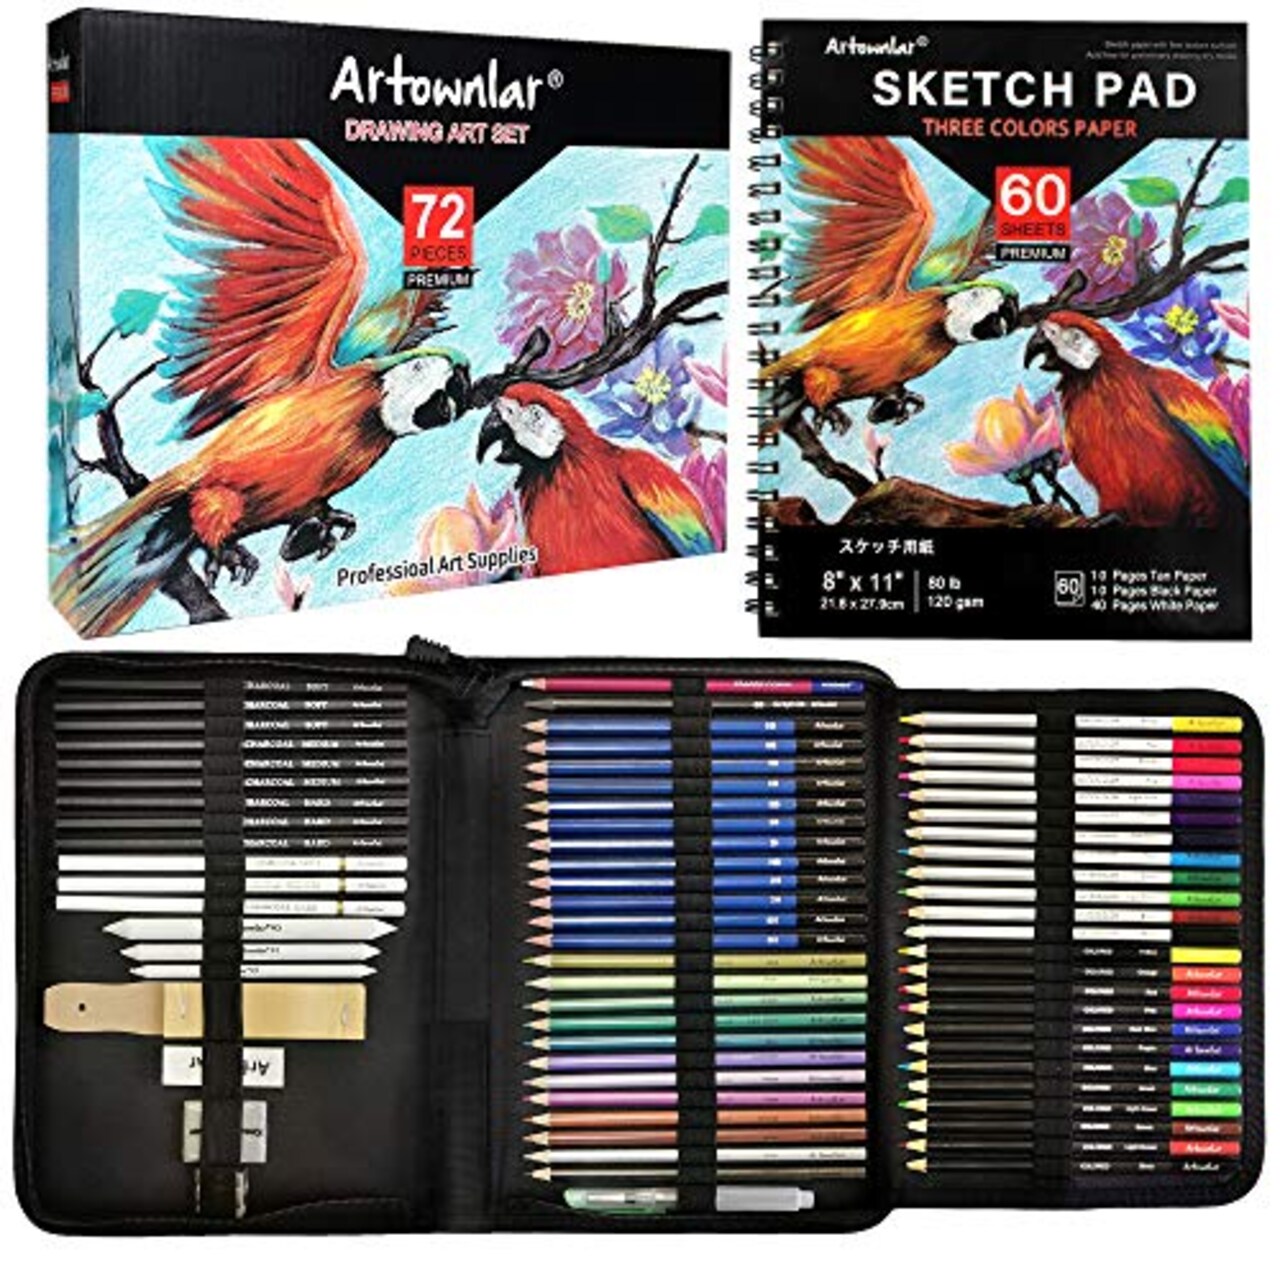 Pro Art 12 Watercolor Pencils. Art Supplies. Drawing Sketching